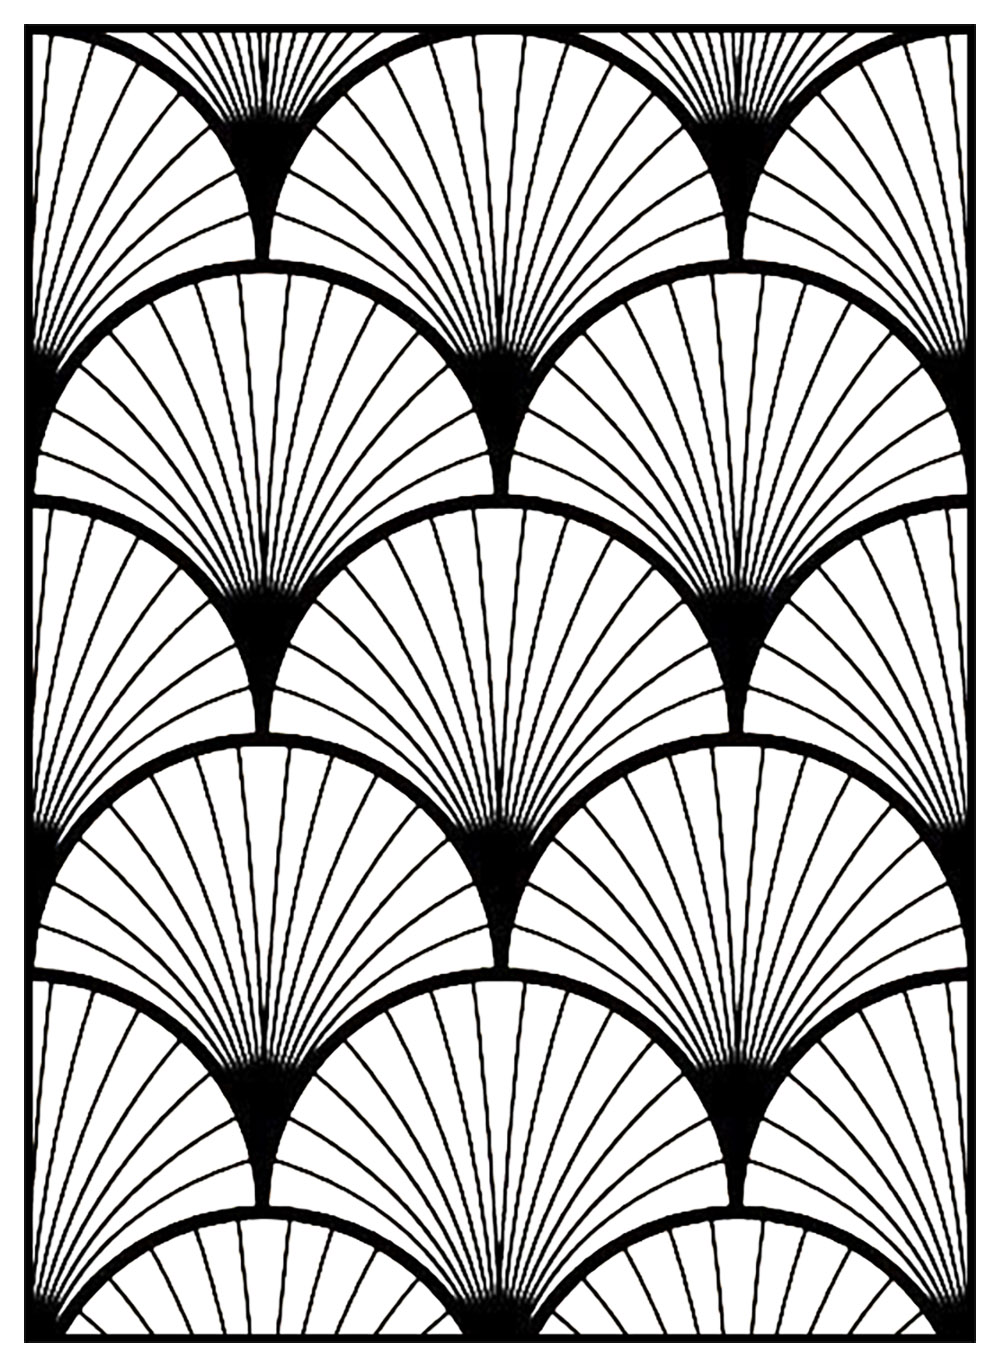 Geometric patterns art deco - 3 - Art Adult Coloring Pages